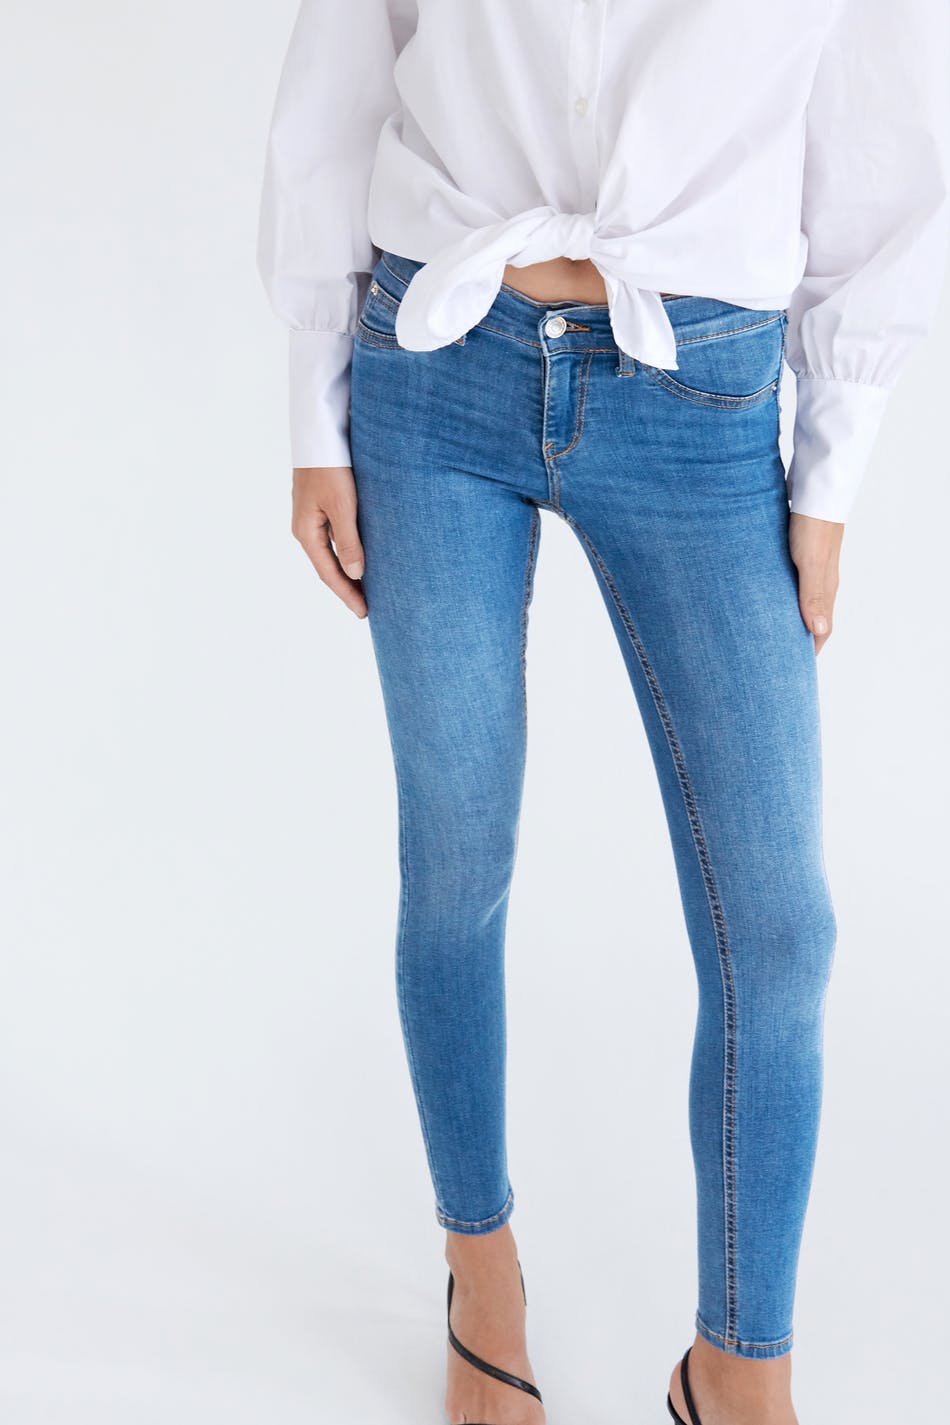 Gina Tricot - Bonnie petite jeans